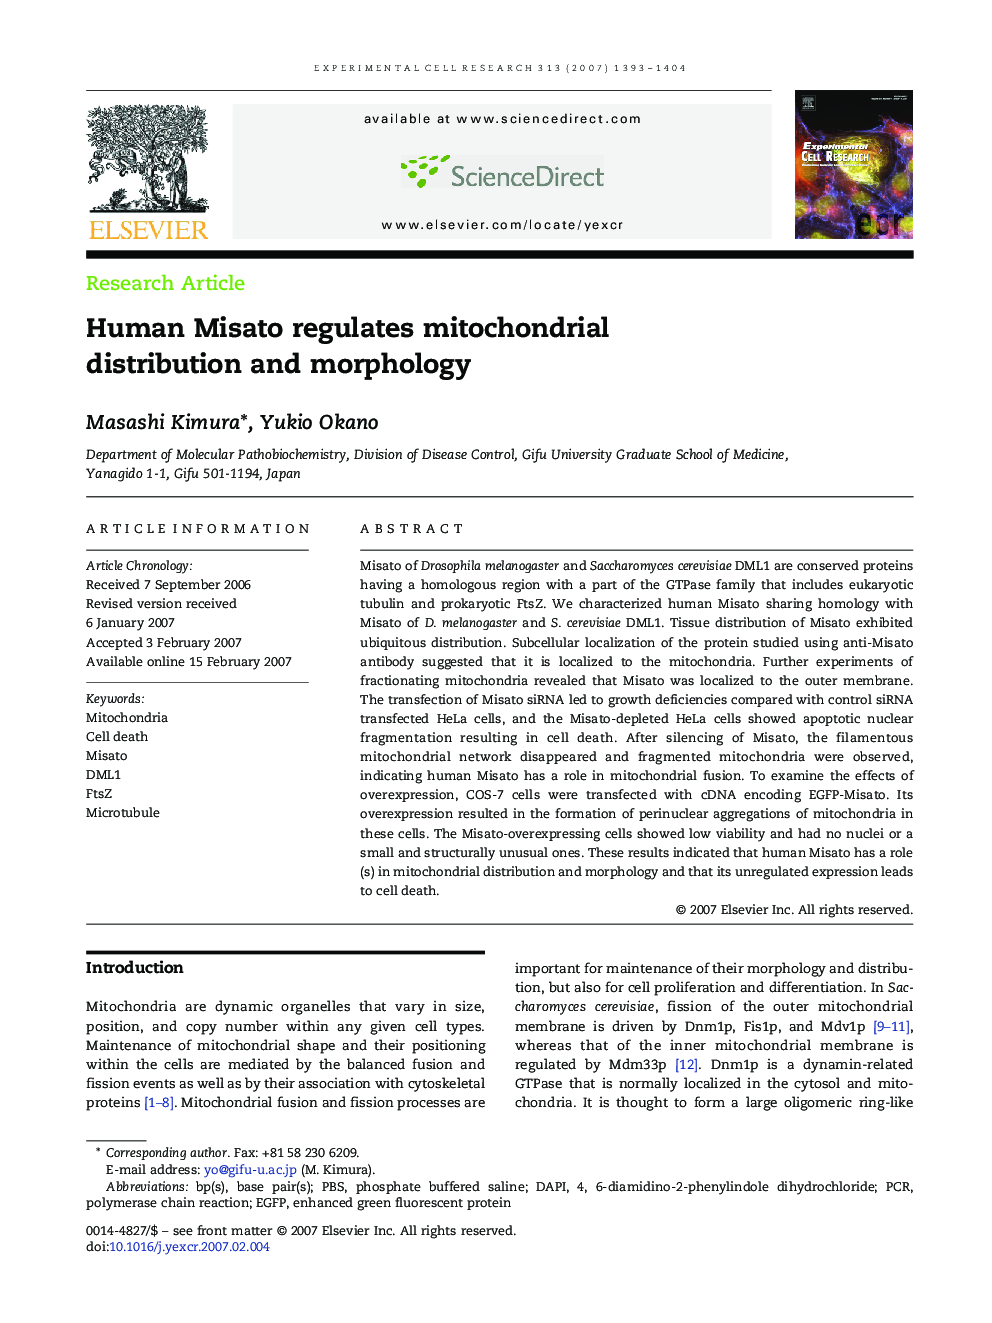 Human Misato regulates mitochondrial distribution and morphology